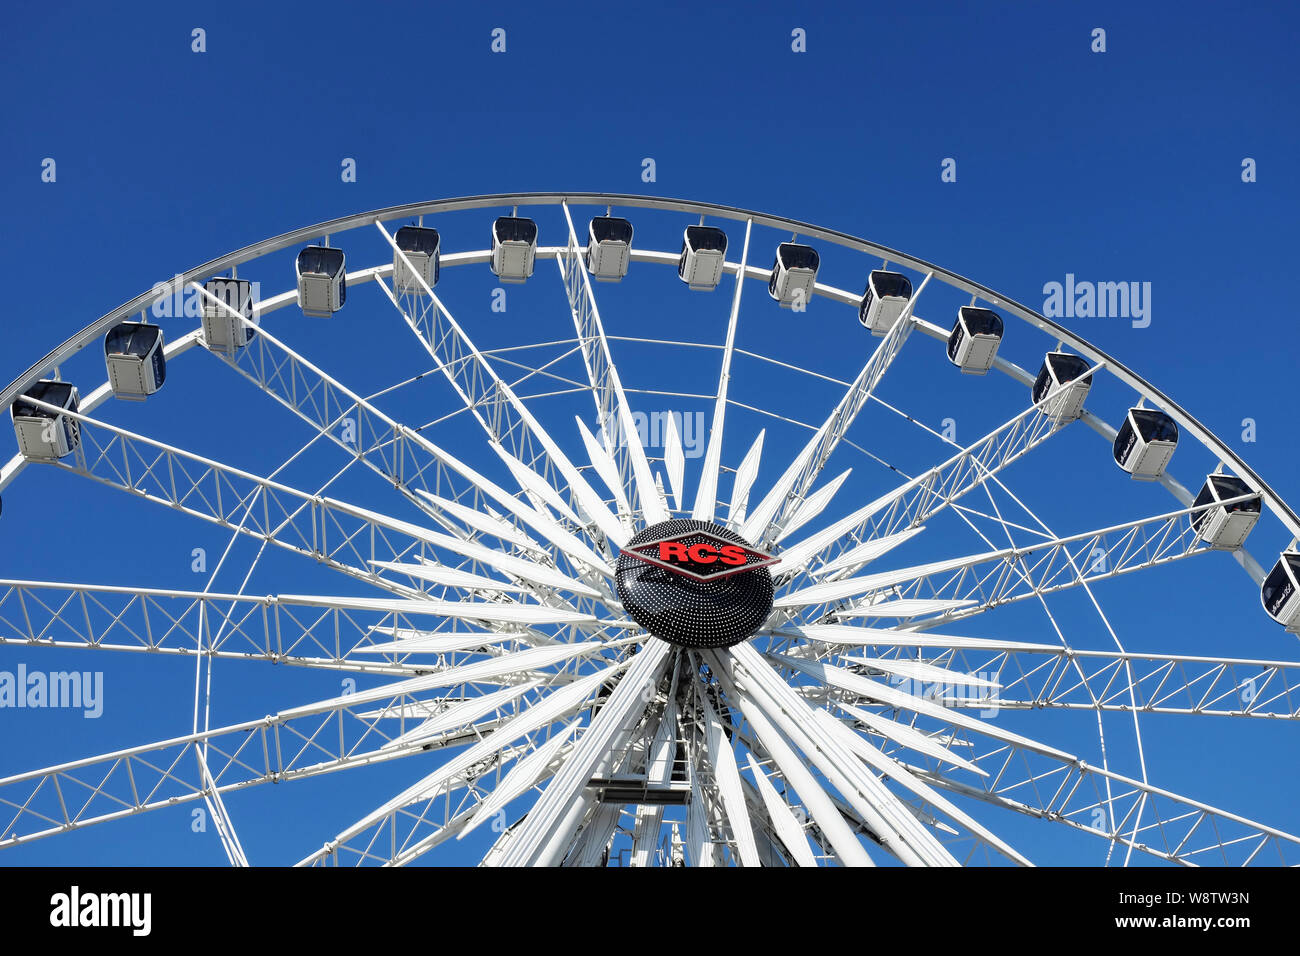 COSTA MESA, CALIFORNIA - AUG 8, 2019: Ferris Wheel closeup against a blue sky at the Orange County Fair. Stock Photo